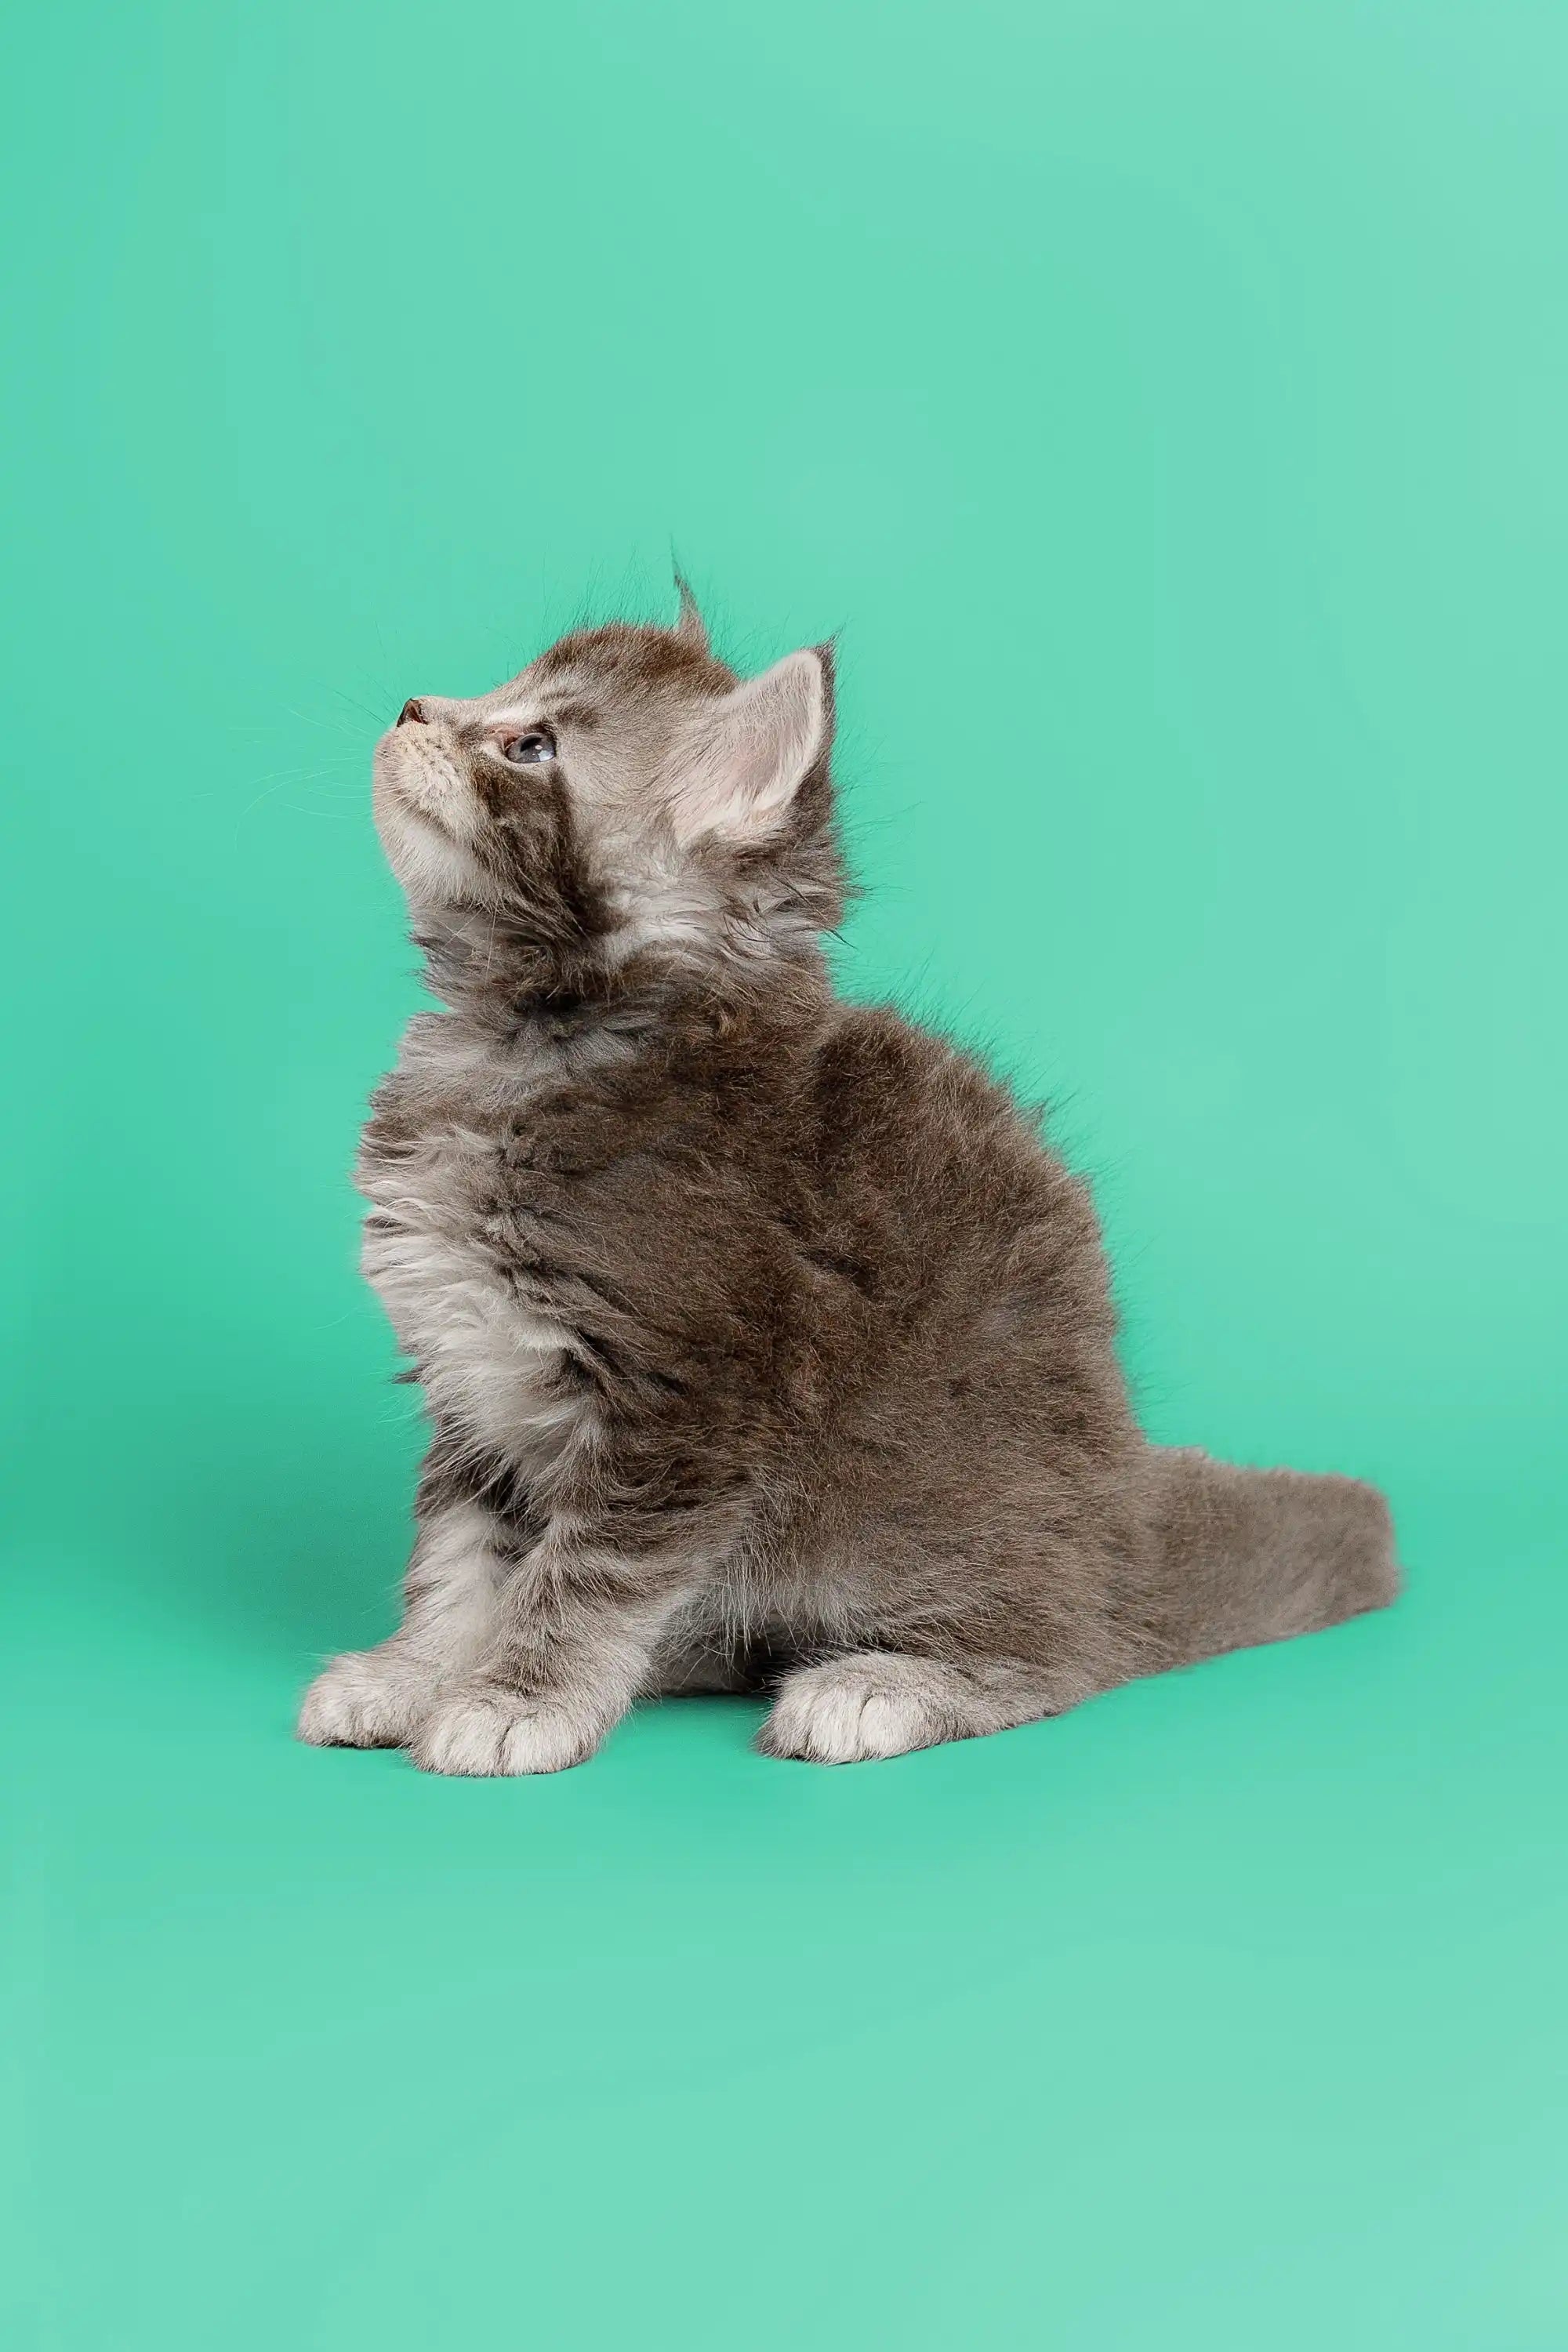 Maine Coon Kittens for Sale Assol | Kitten